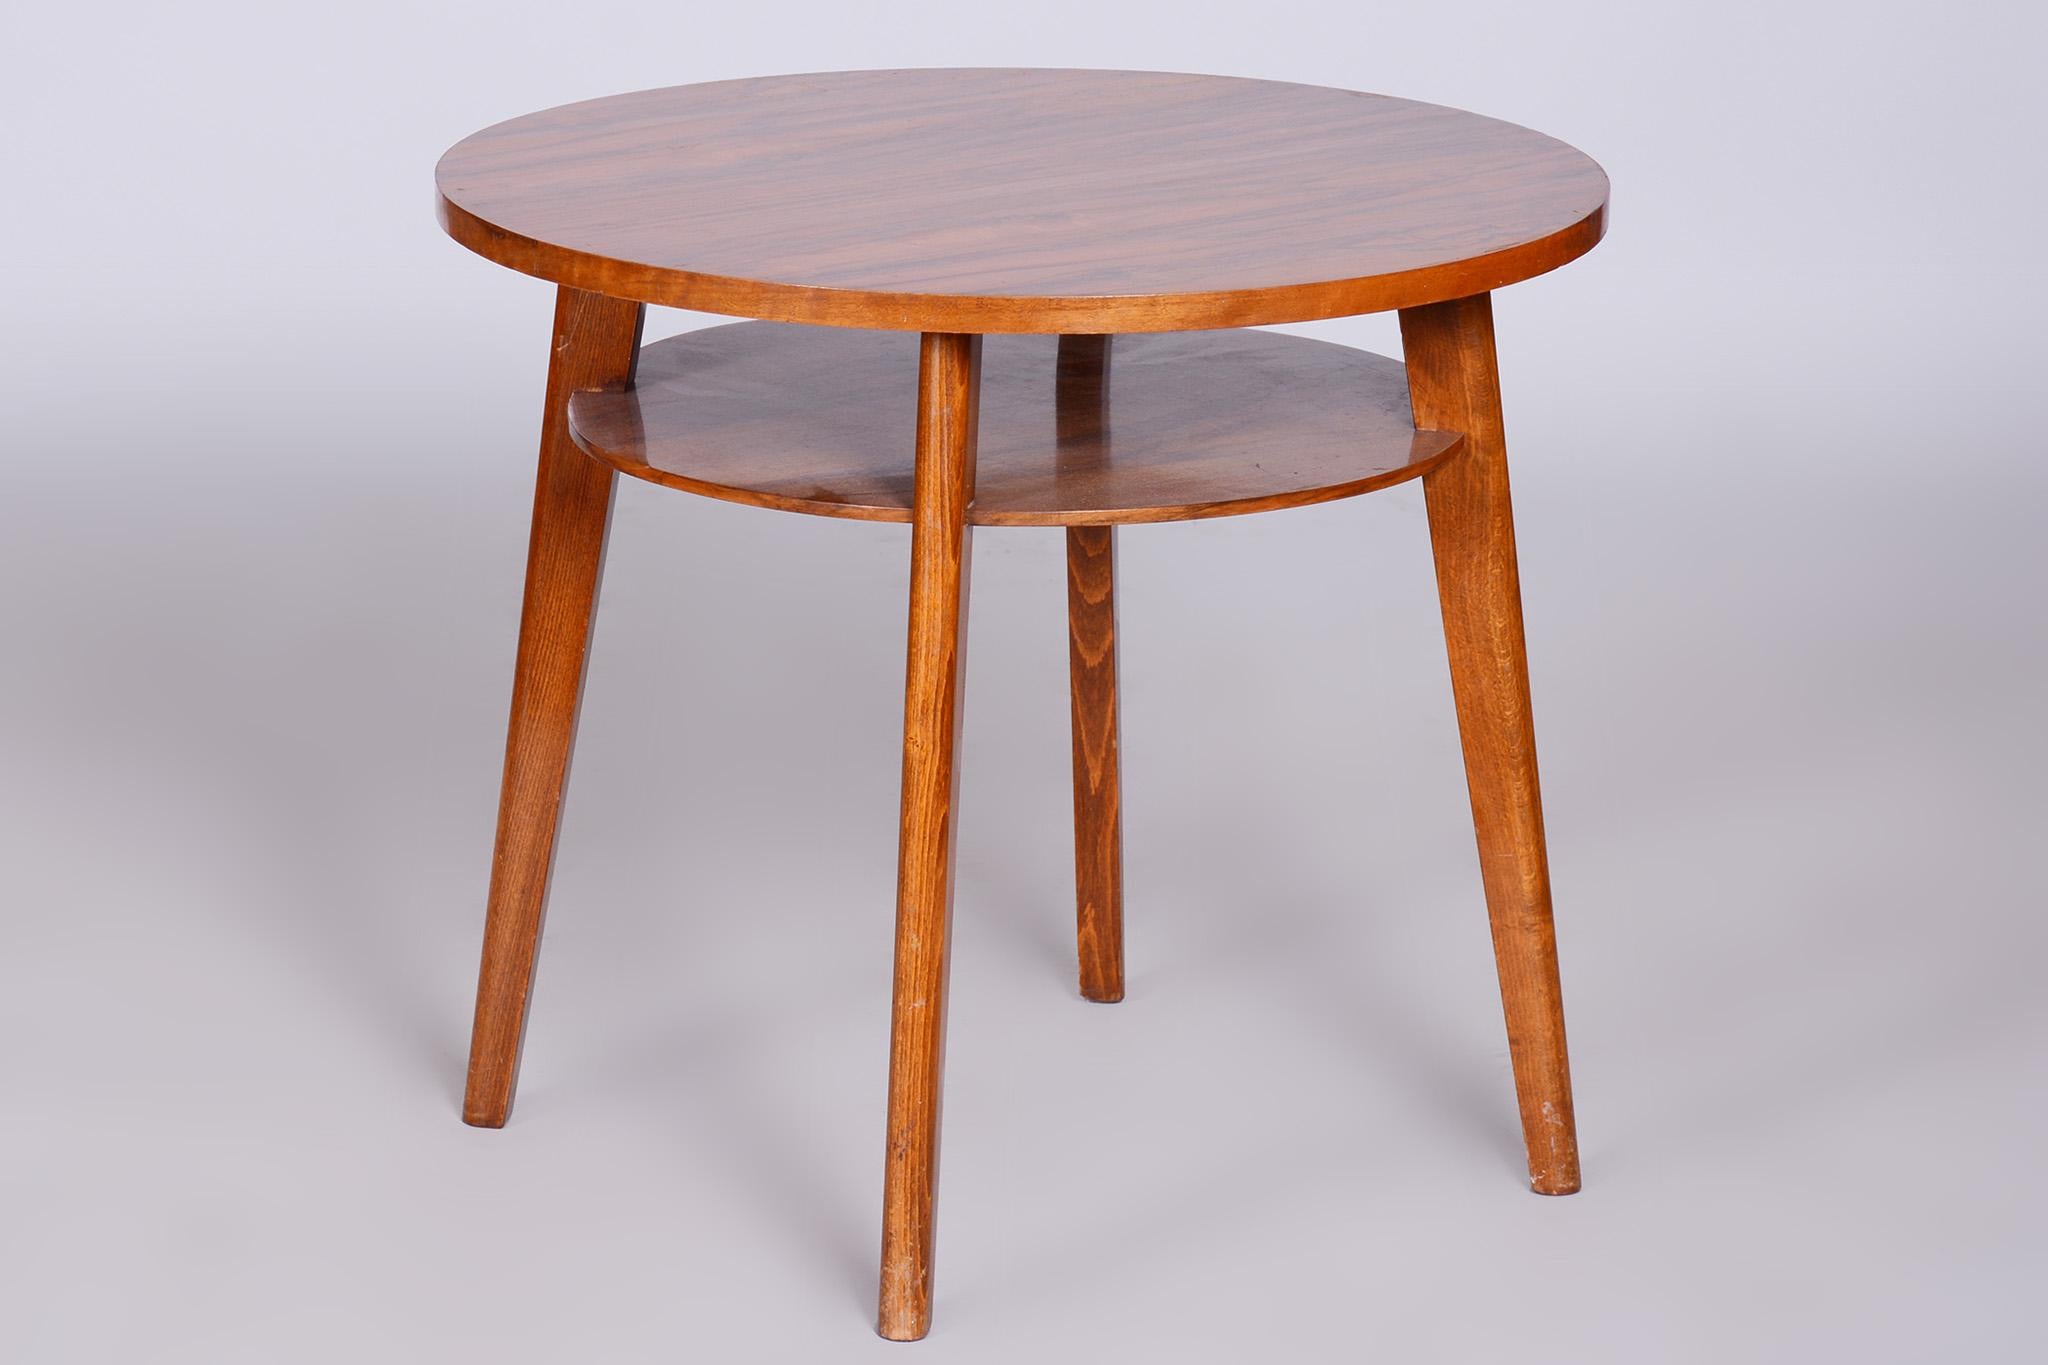 Original Midcentury Small Round Table by Jitona, Beech, Walnut, Czechia, 1950s For Sale 1